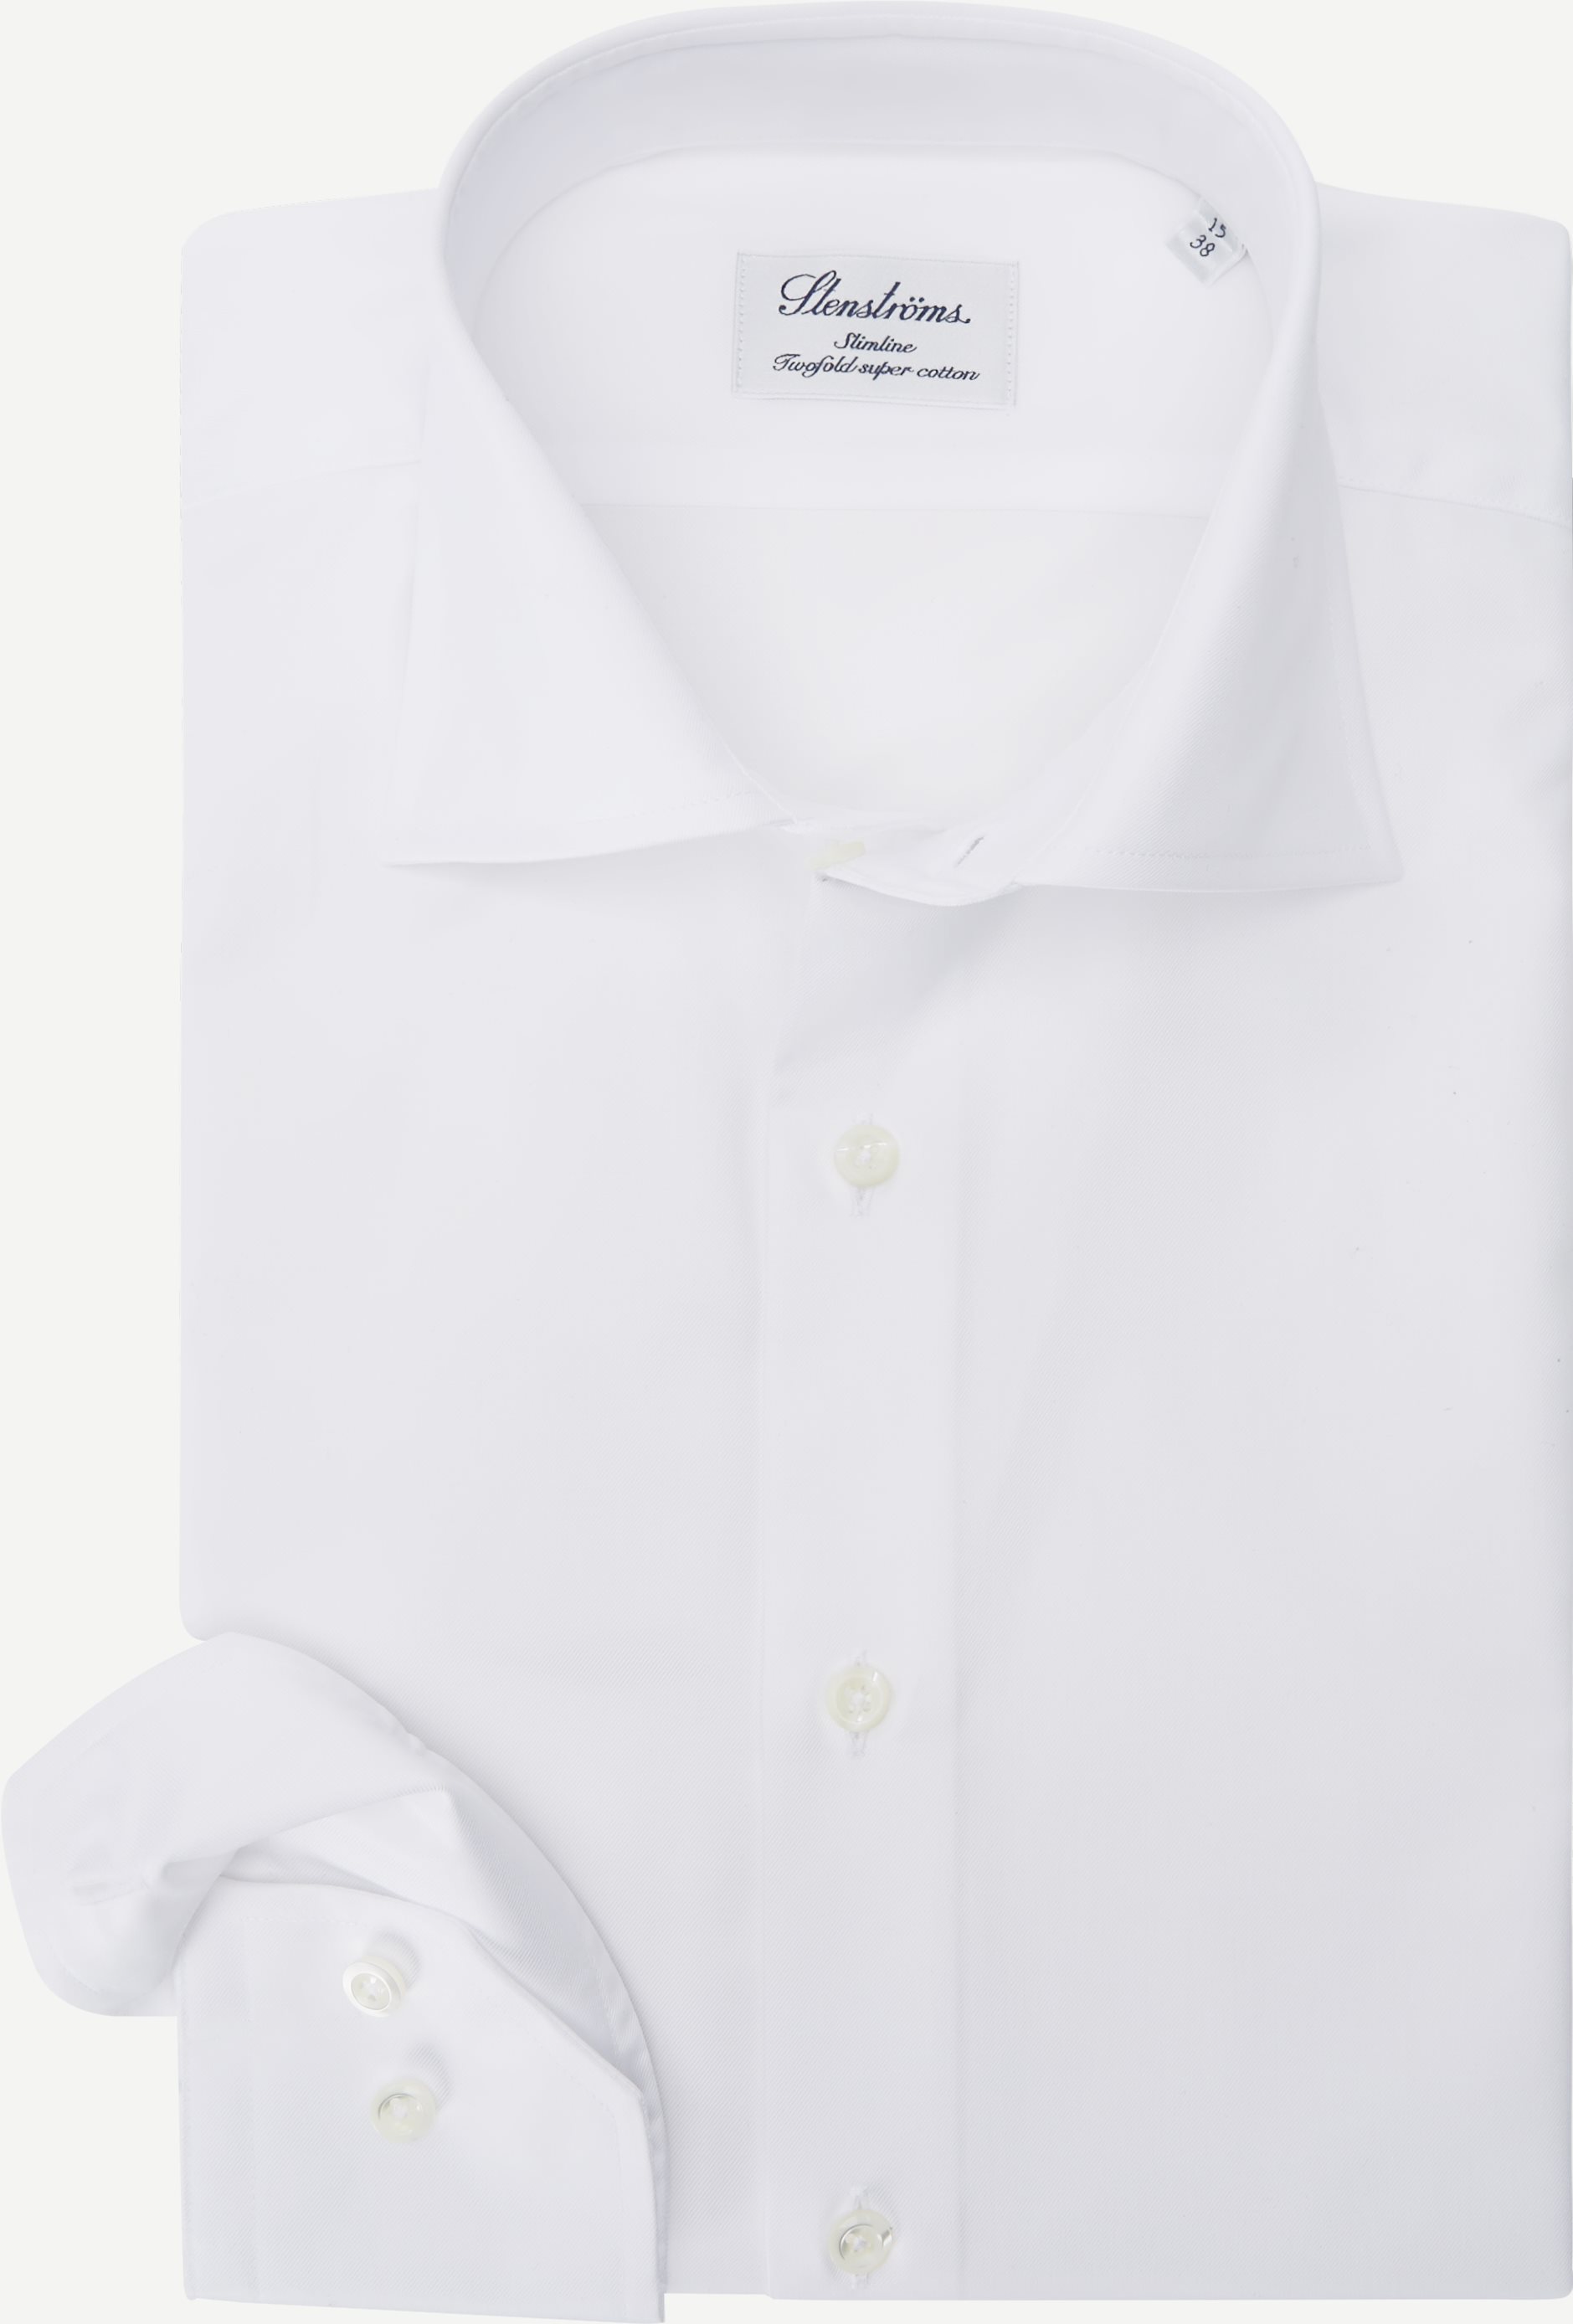 Tvåfaldig Super Cotton Shirt - Skjortor - Slim fit - Vit